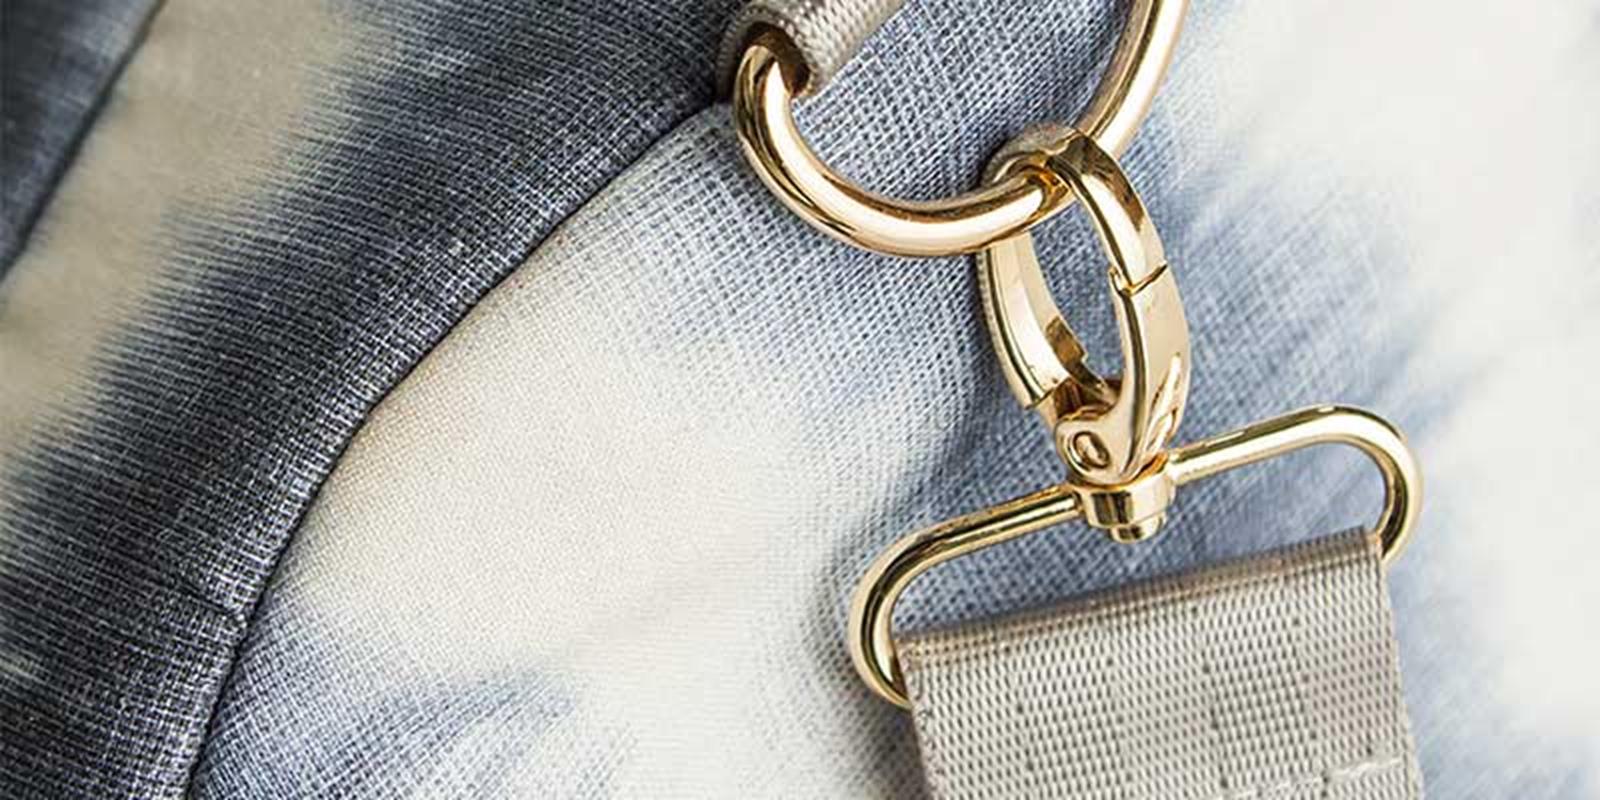 How to repair frayed or peeling purse handles